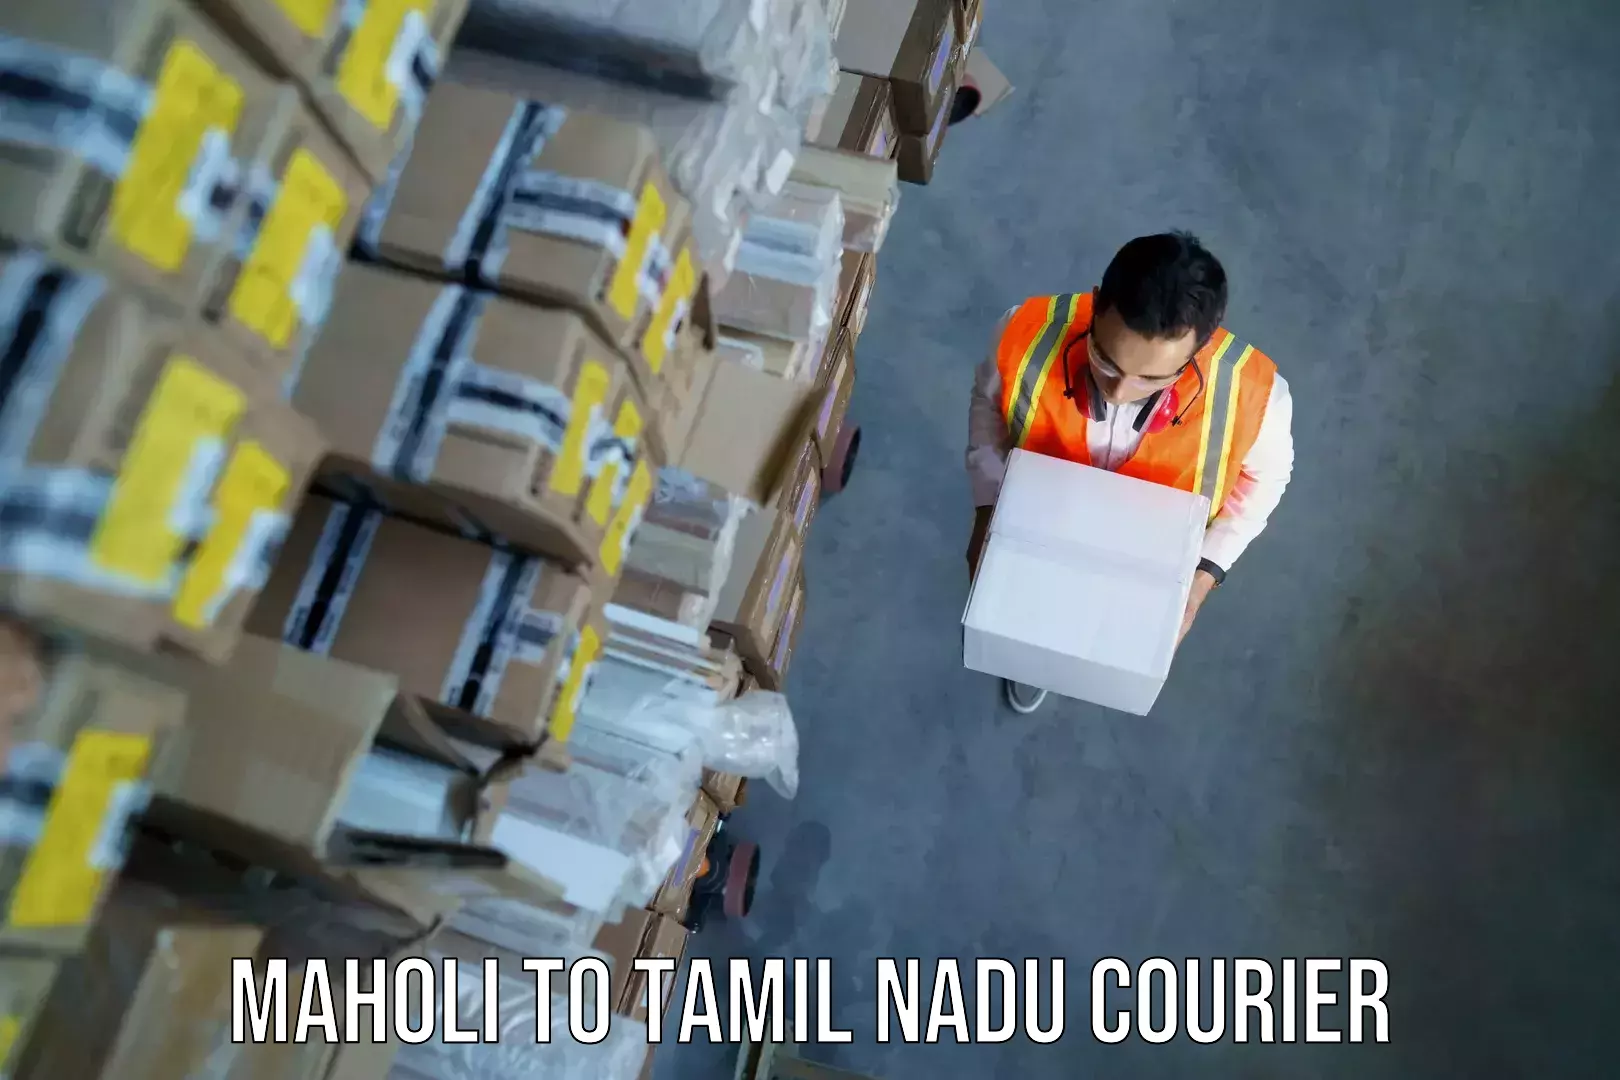 Luggage shipment specialists Maholi to Tamil Nadu